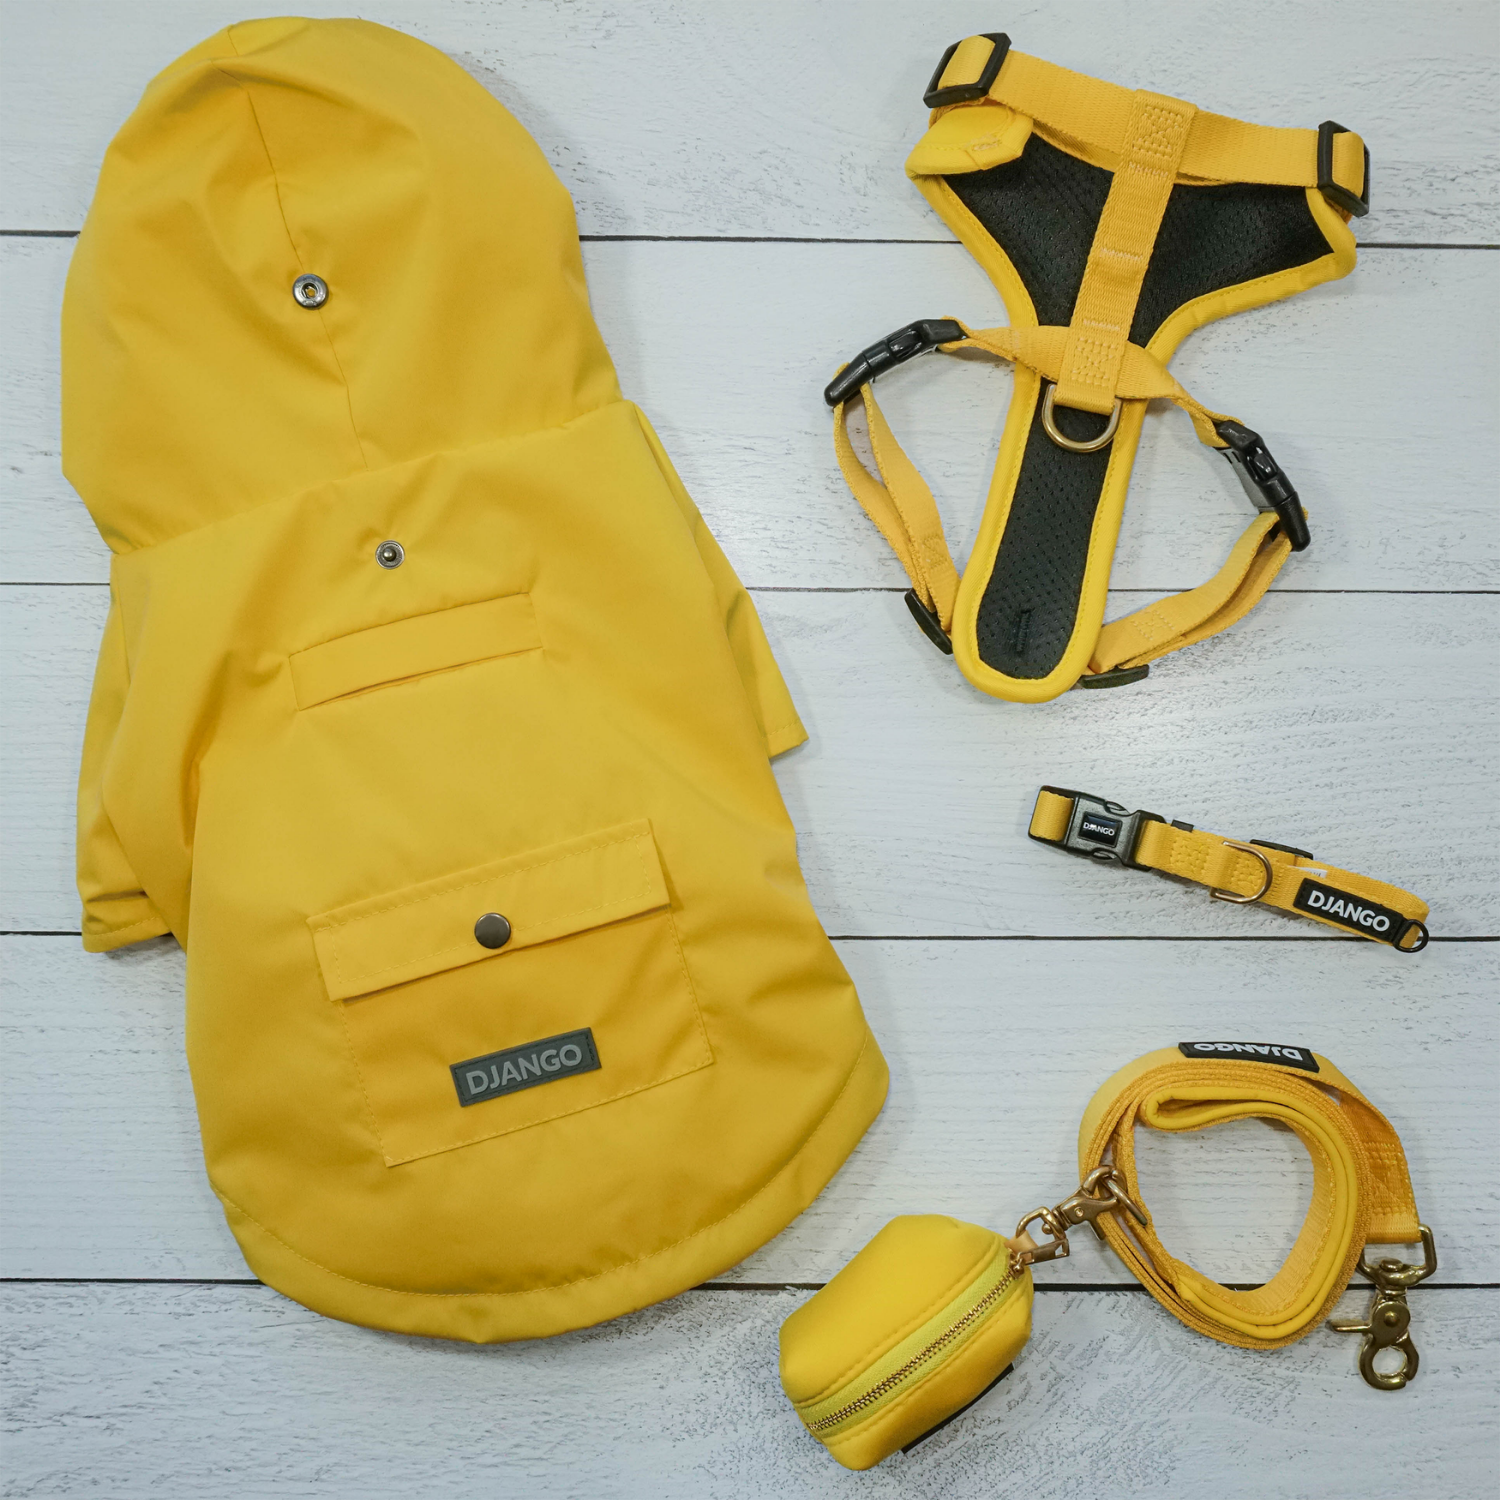 DJANGO Adventure Dog Harness, Dog Collar, Dog Leash, Poop Bag Holder, and matching Highland Cold Weather Dog Jacket and Raincoat in Dandelion Yellow - djangobrand.com